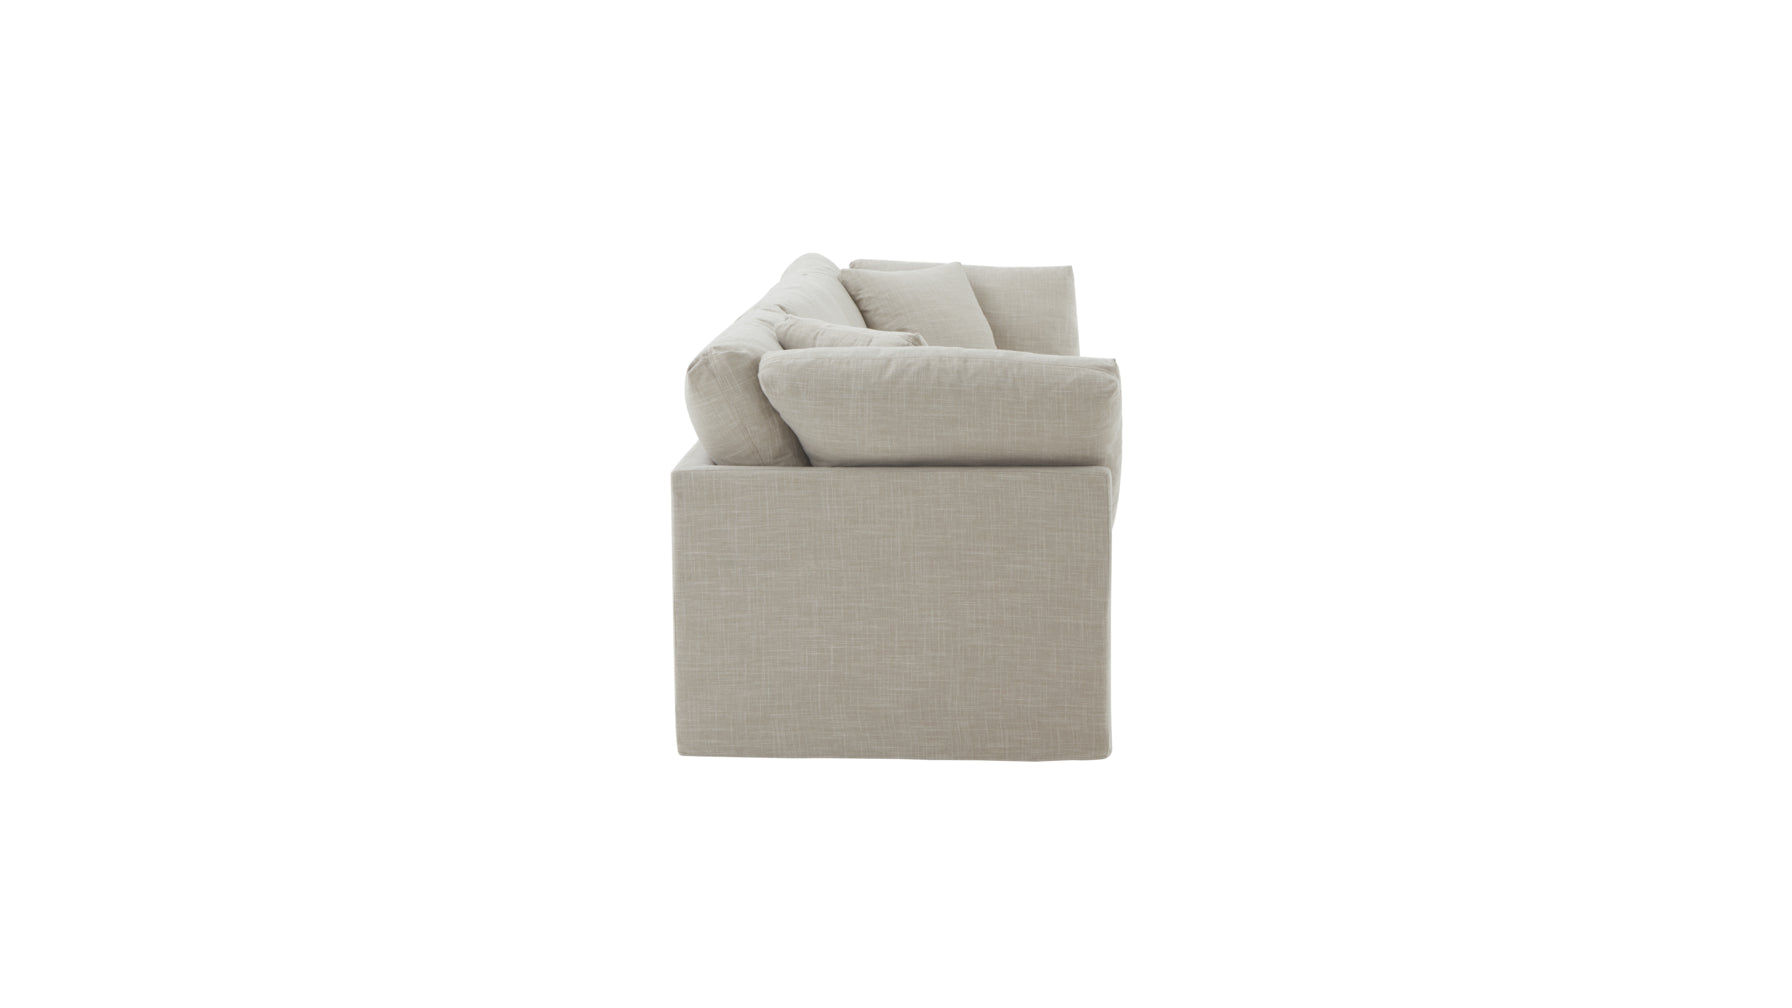 Get Together™ 3-Piece Modular Sofa, Standard, Light Pebble - Image 5